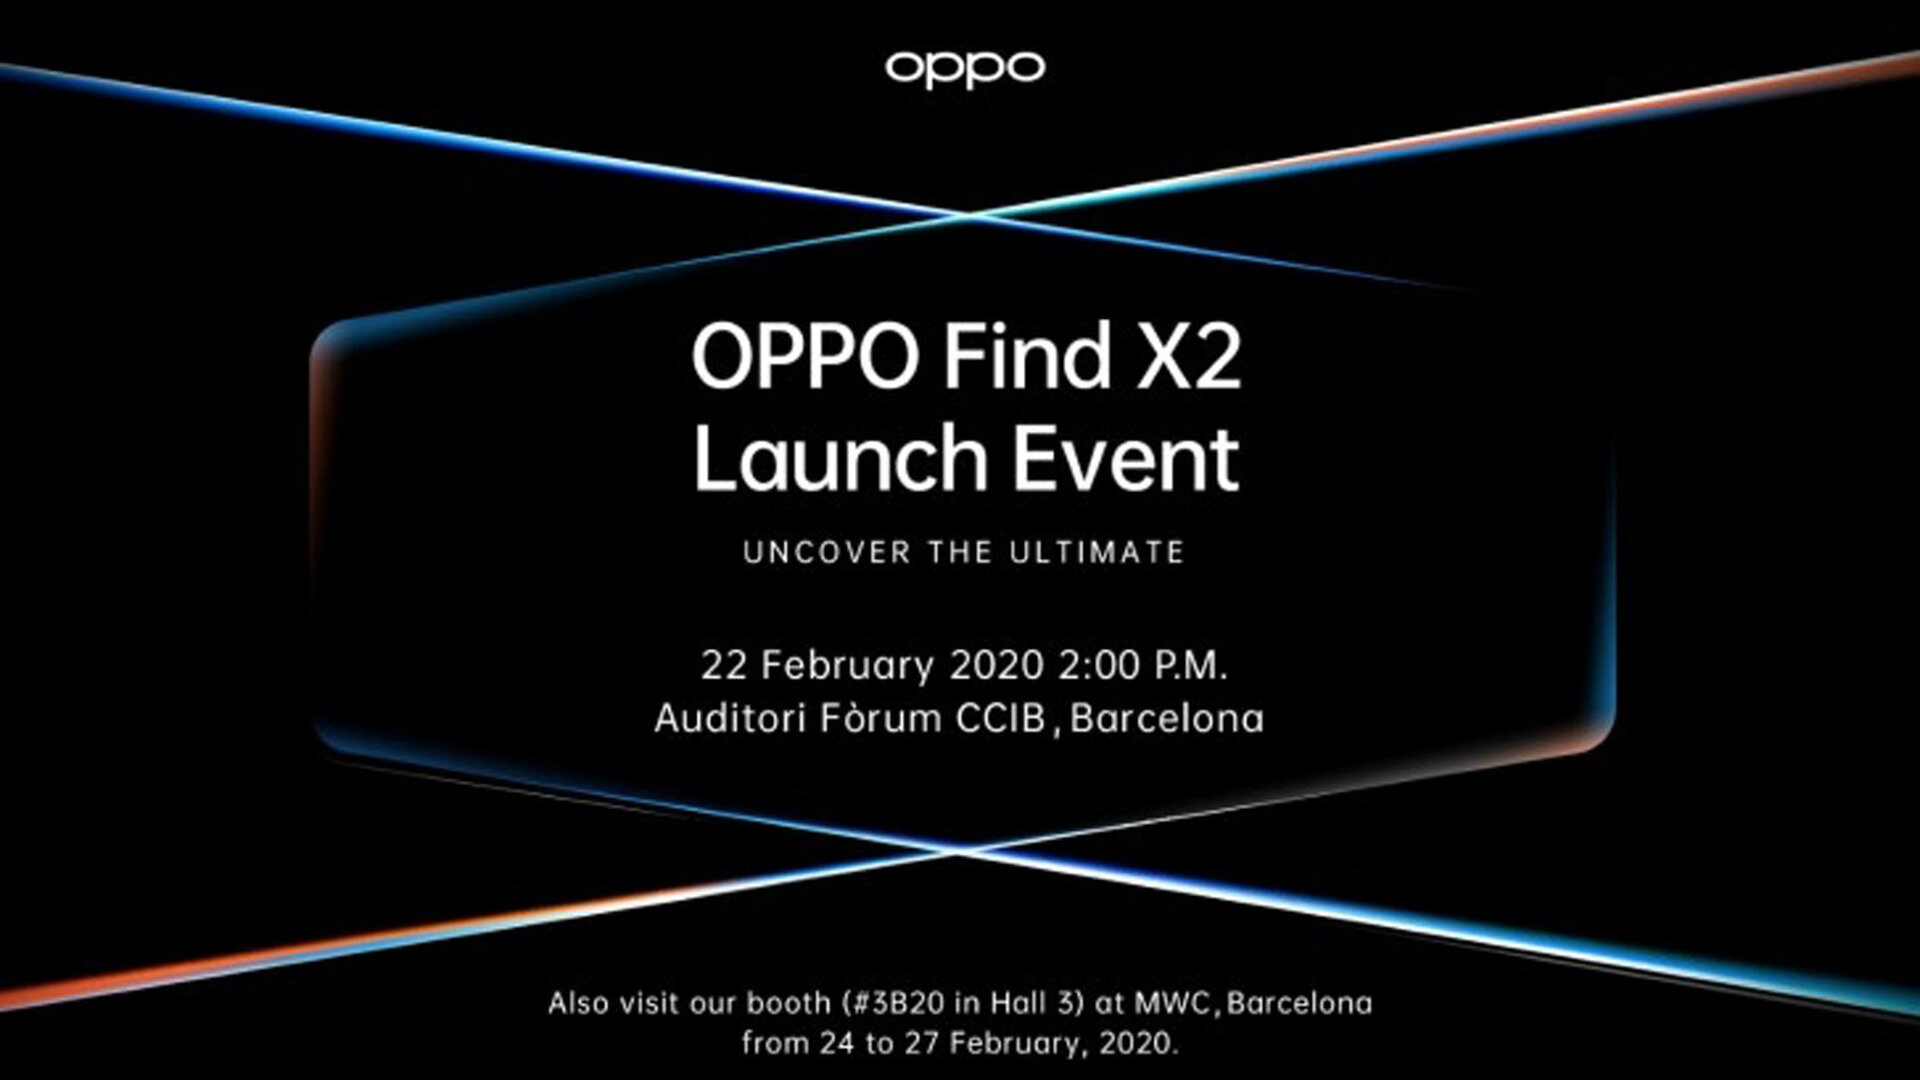 Thông báo của Oppo Find X2